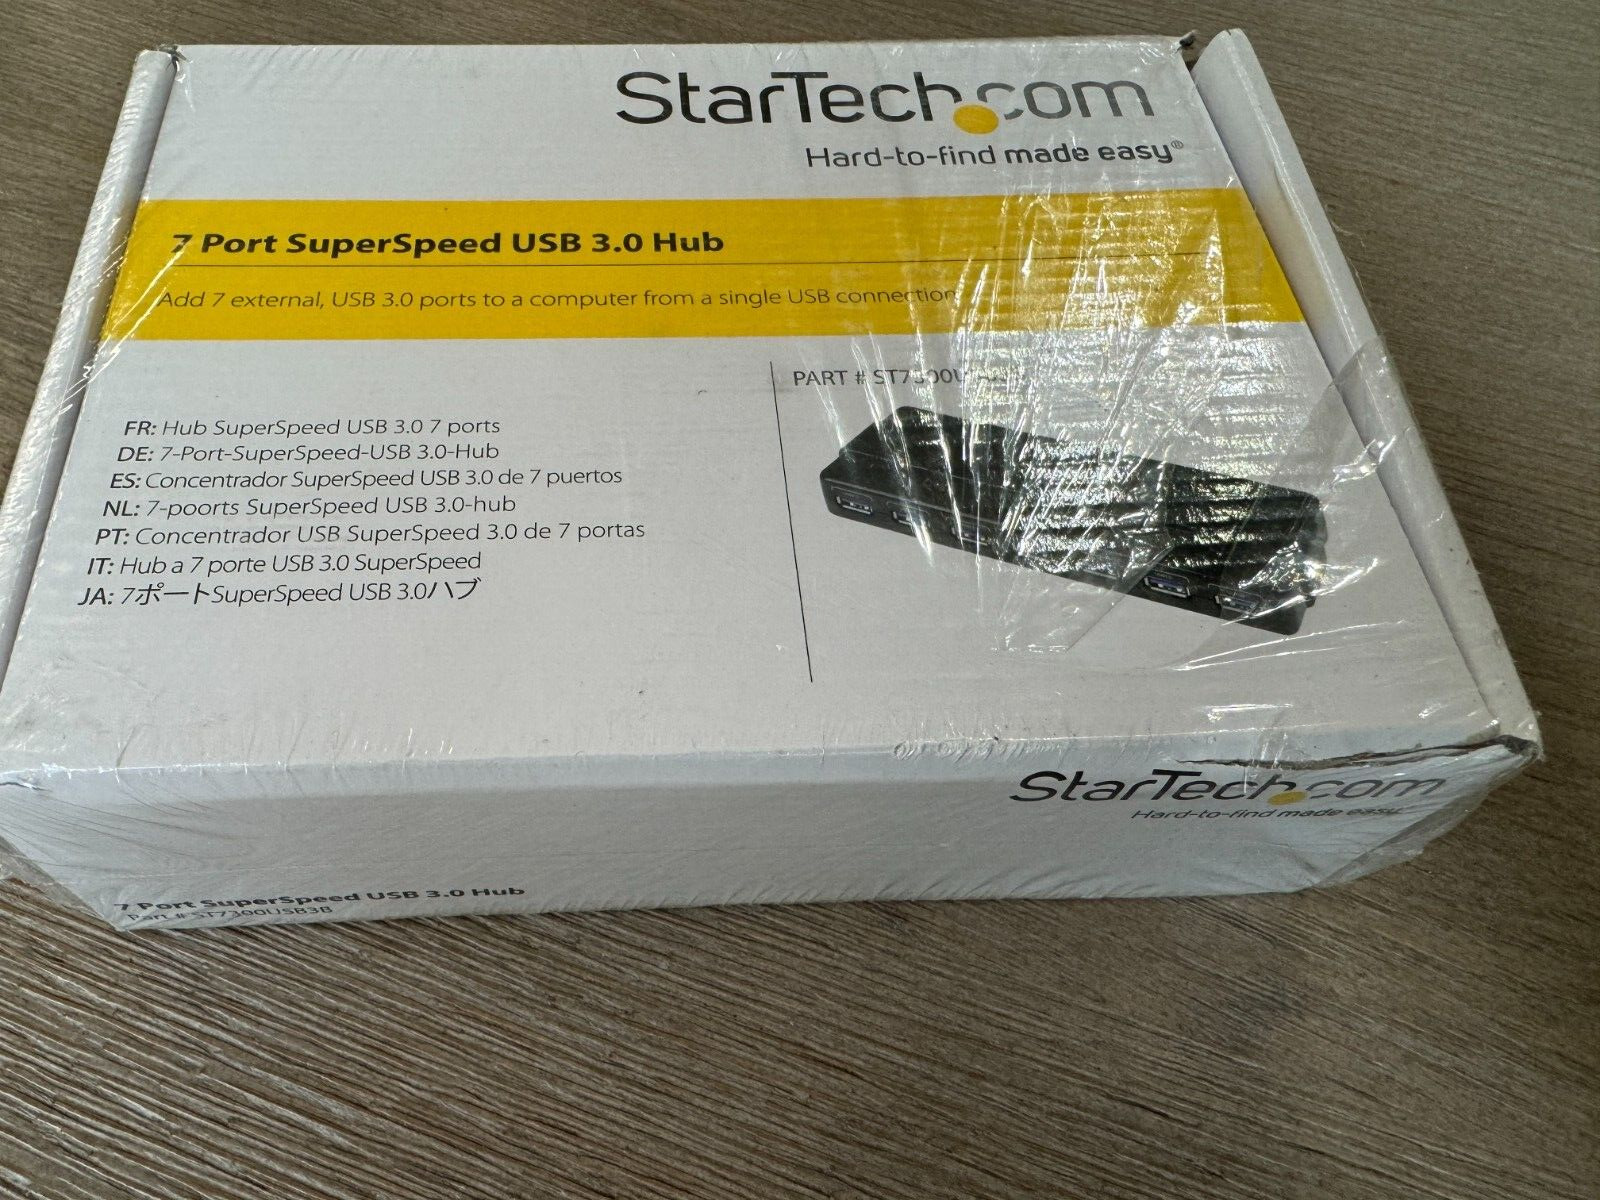 StarTech.com 7 Port SuperSpeed USB 3.0 Hub, Part #: ST7300USB3B